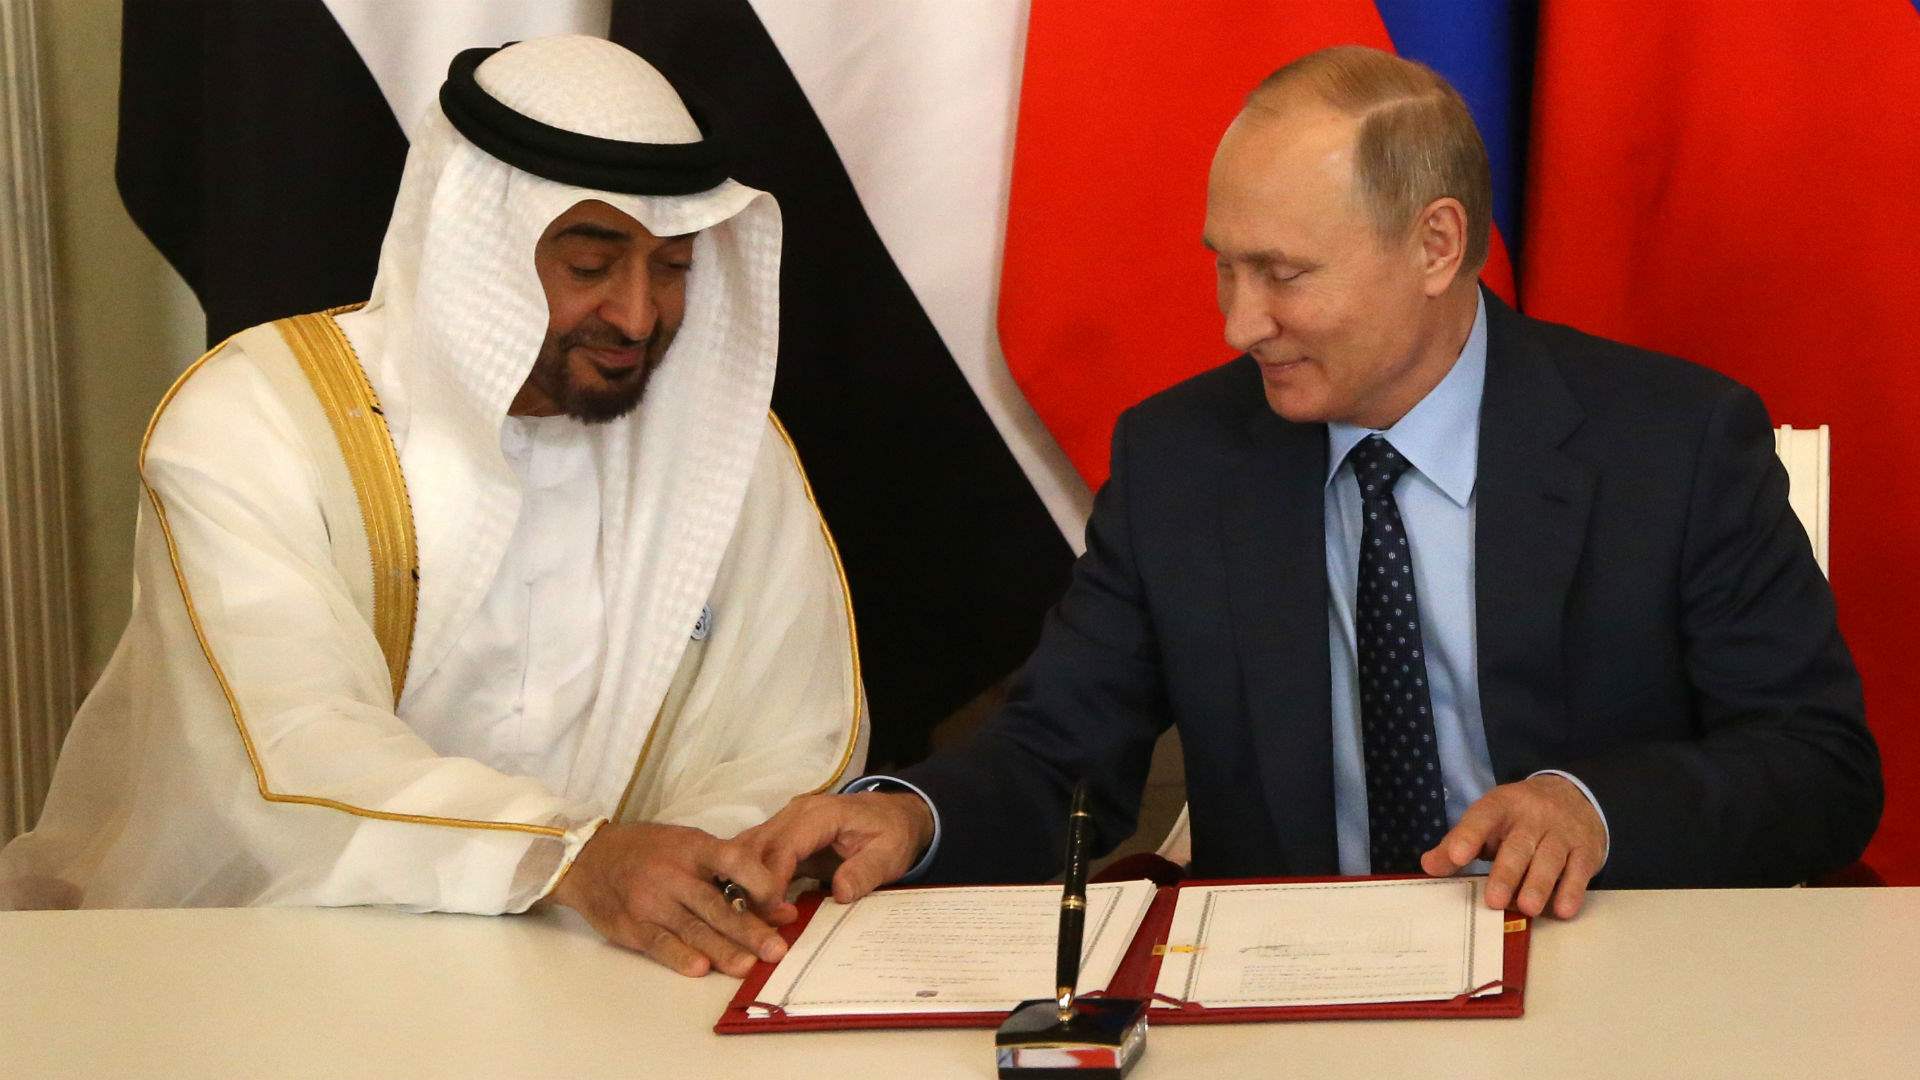 Putin: Russian-Emirati relations have reached an unprecedented level